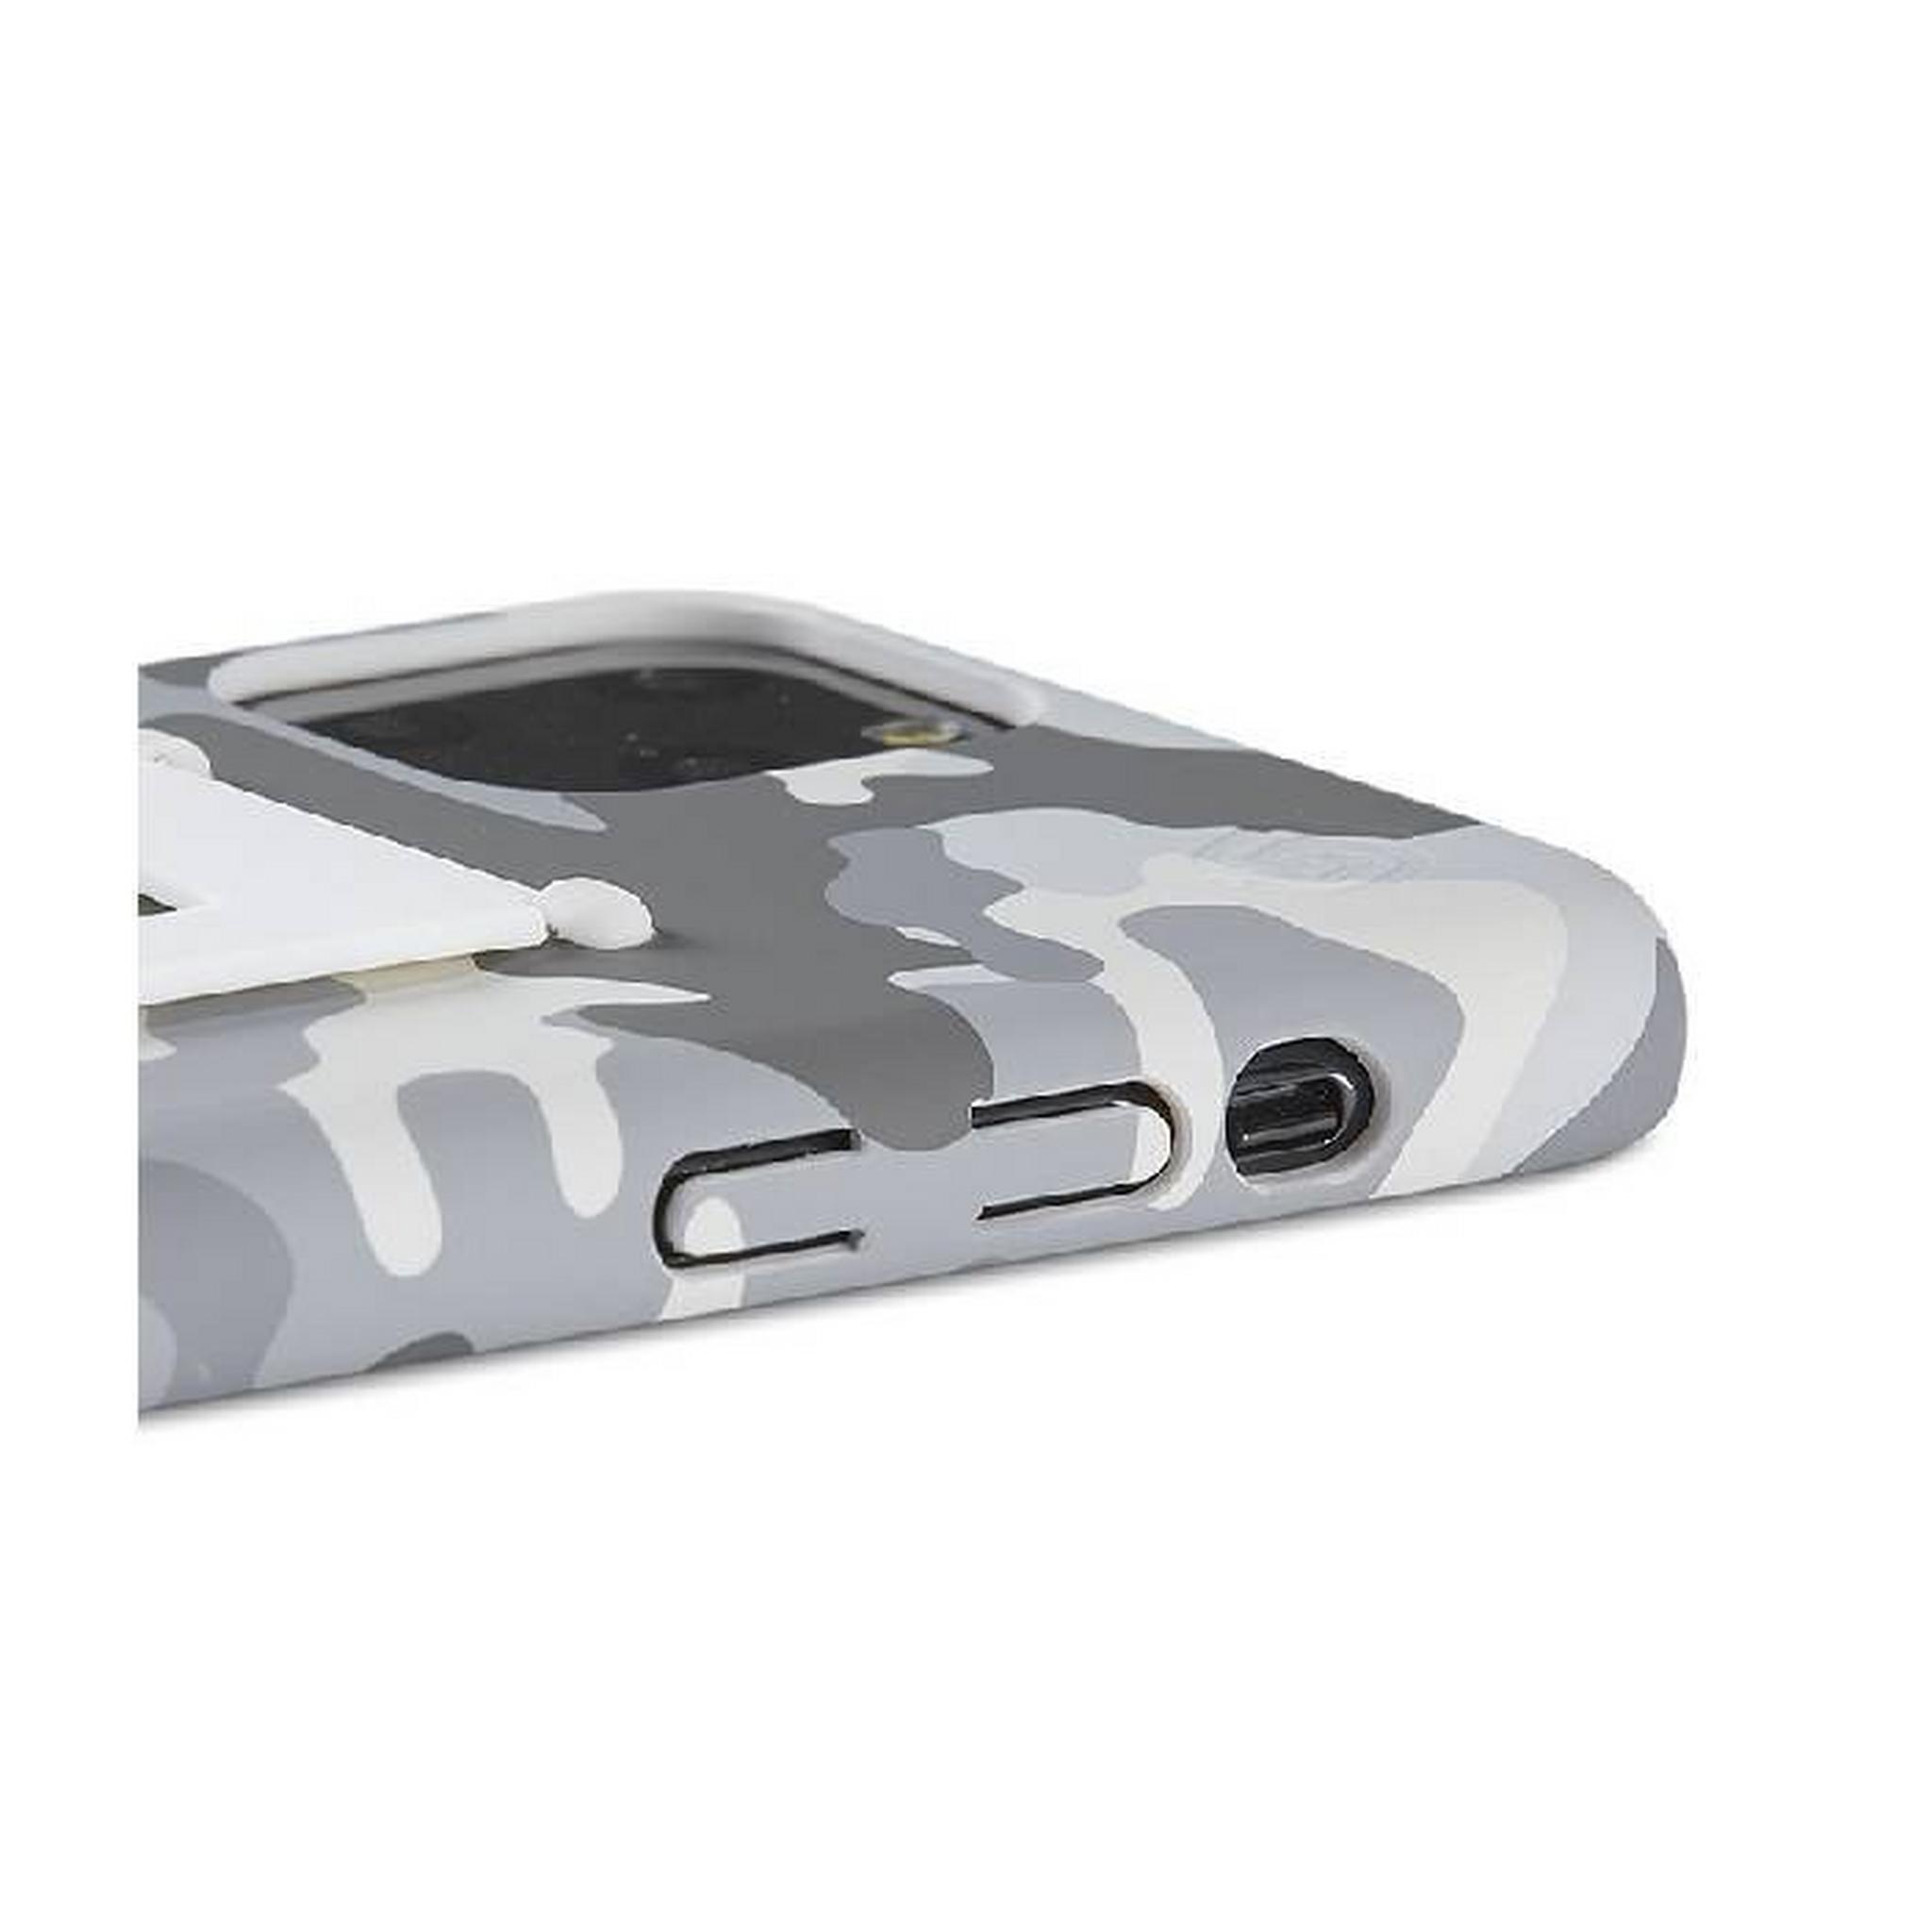 Grip2u slim case for iPhone 11 pro - Urban Camo